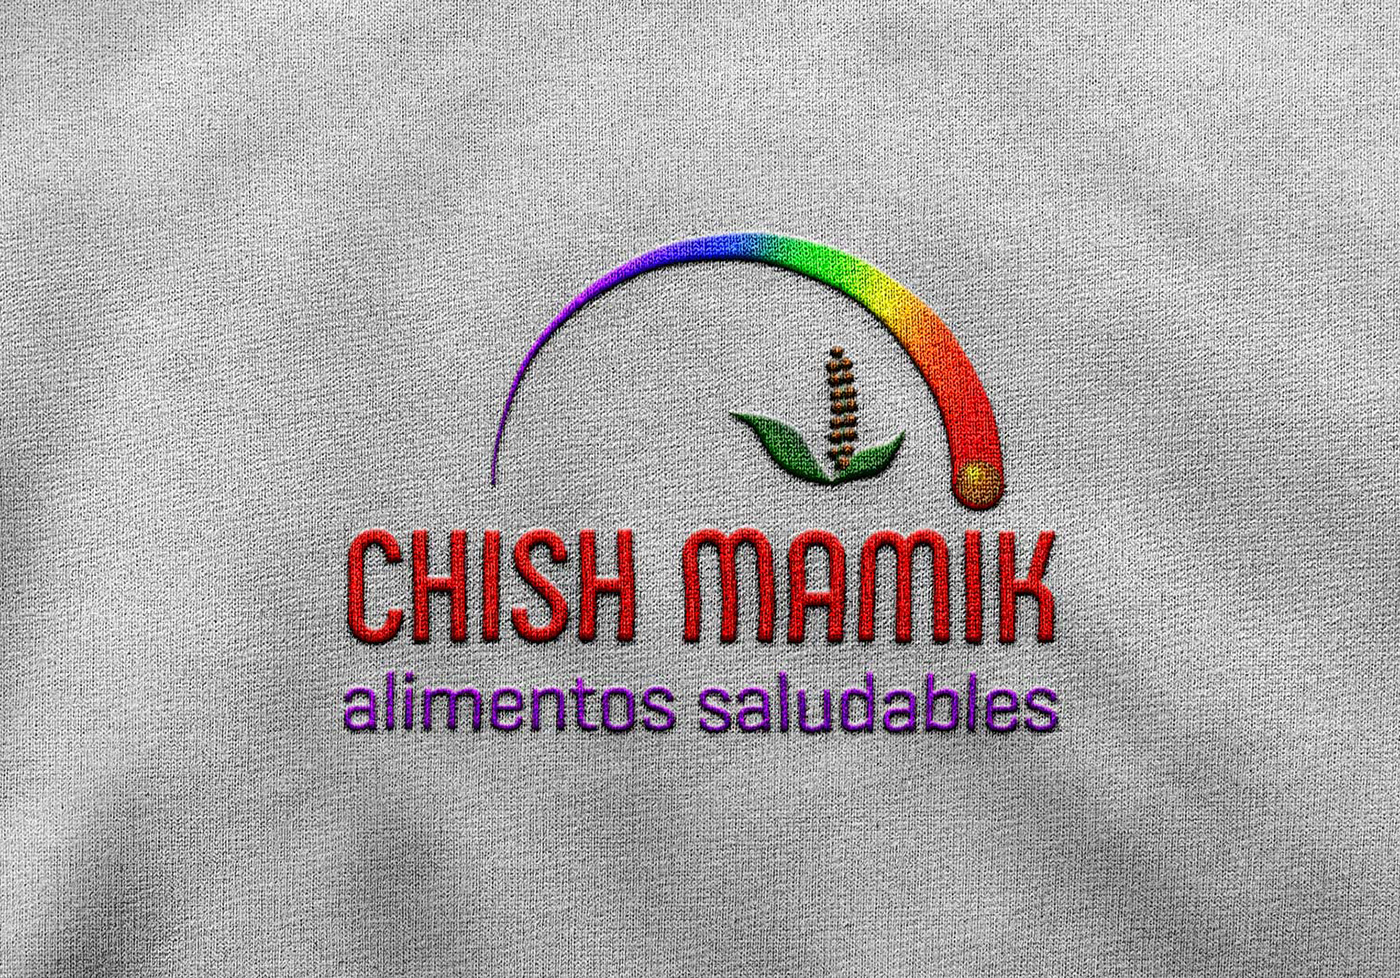 Chish Mamik